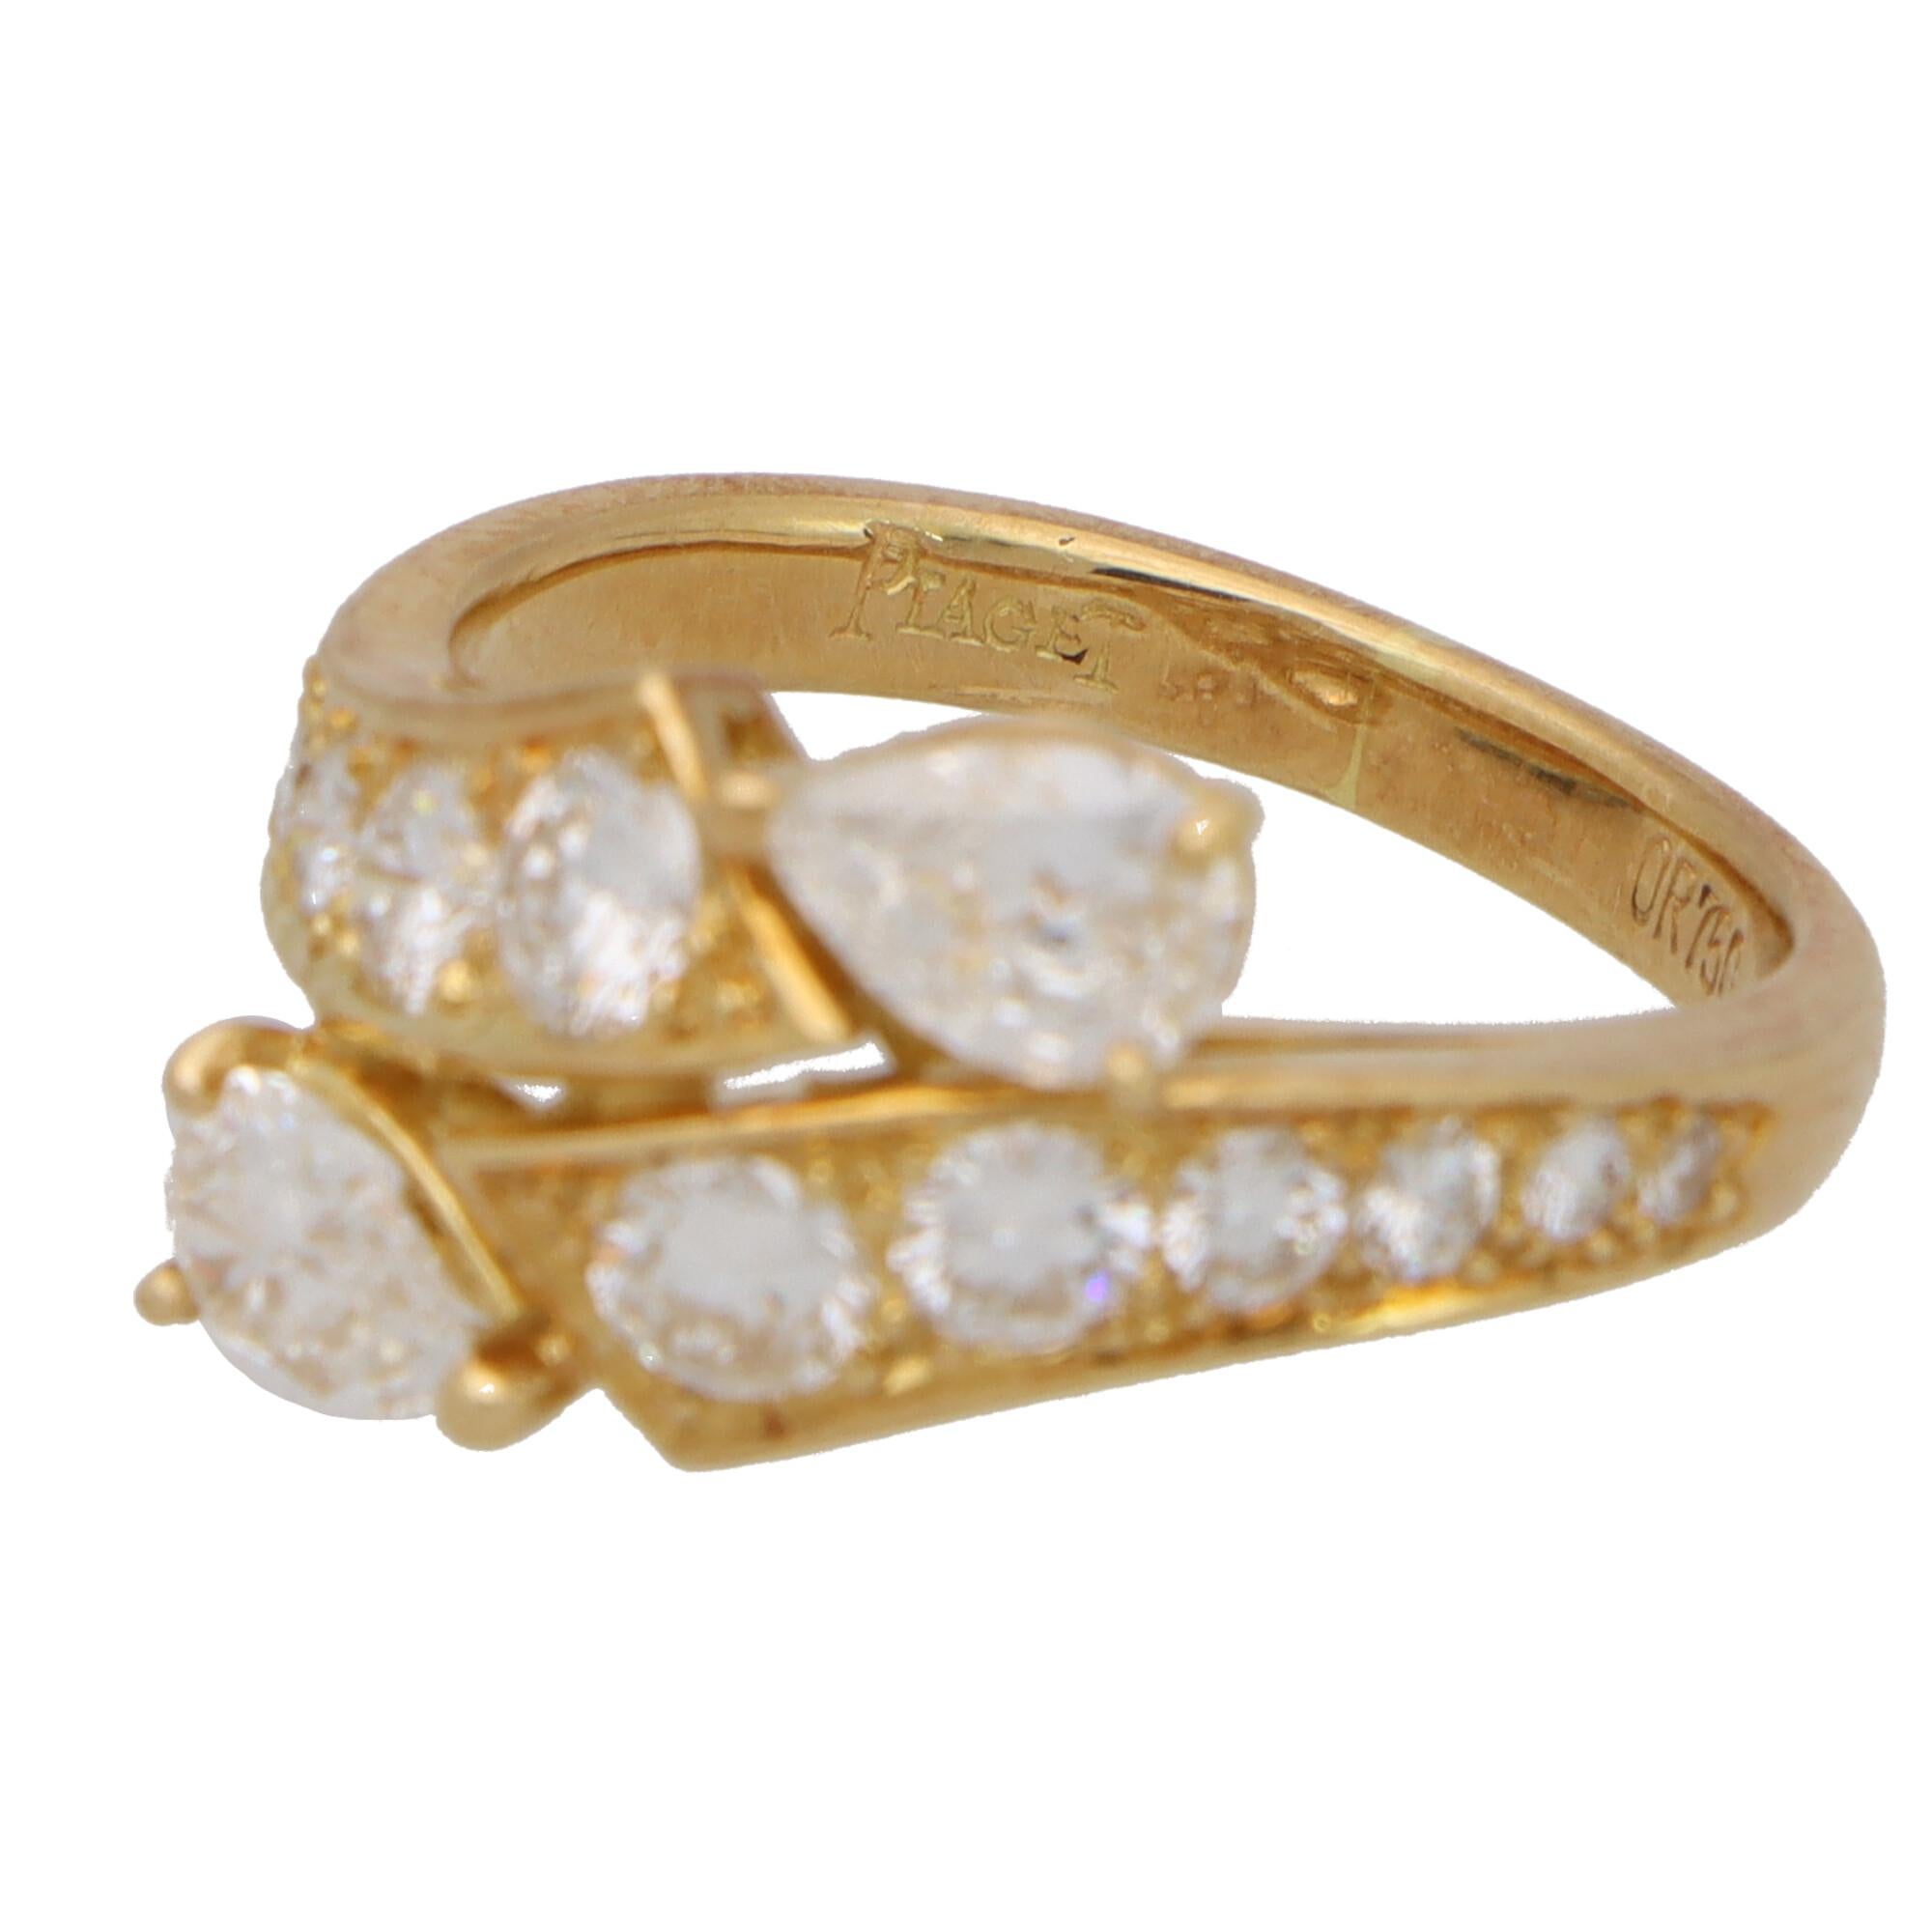 Women's or Men's Vintage Piaget Toi-et-moi Diamond Crossover Ring Set in 18k Yellow Gold